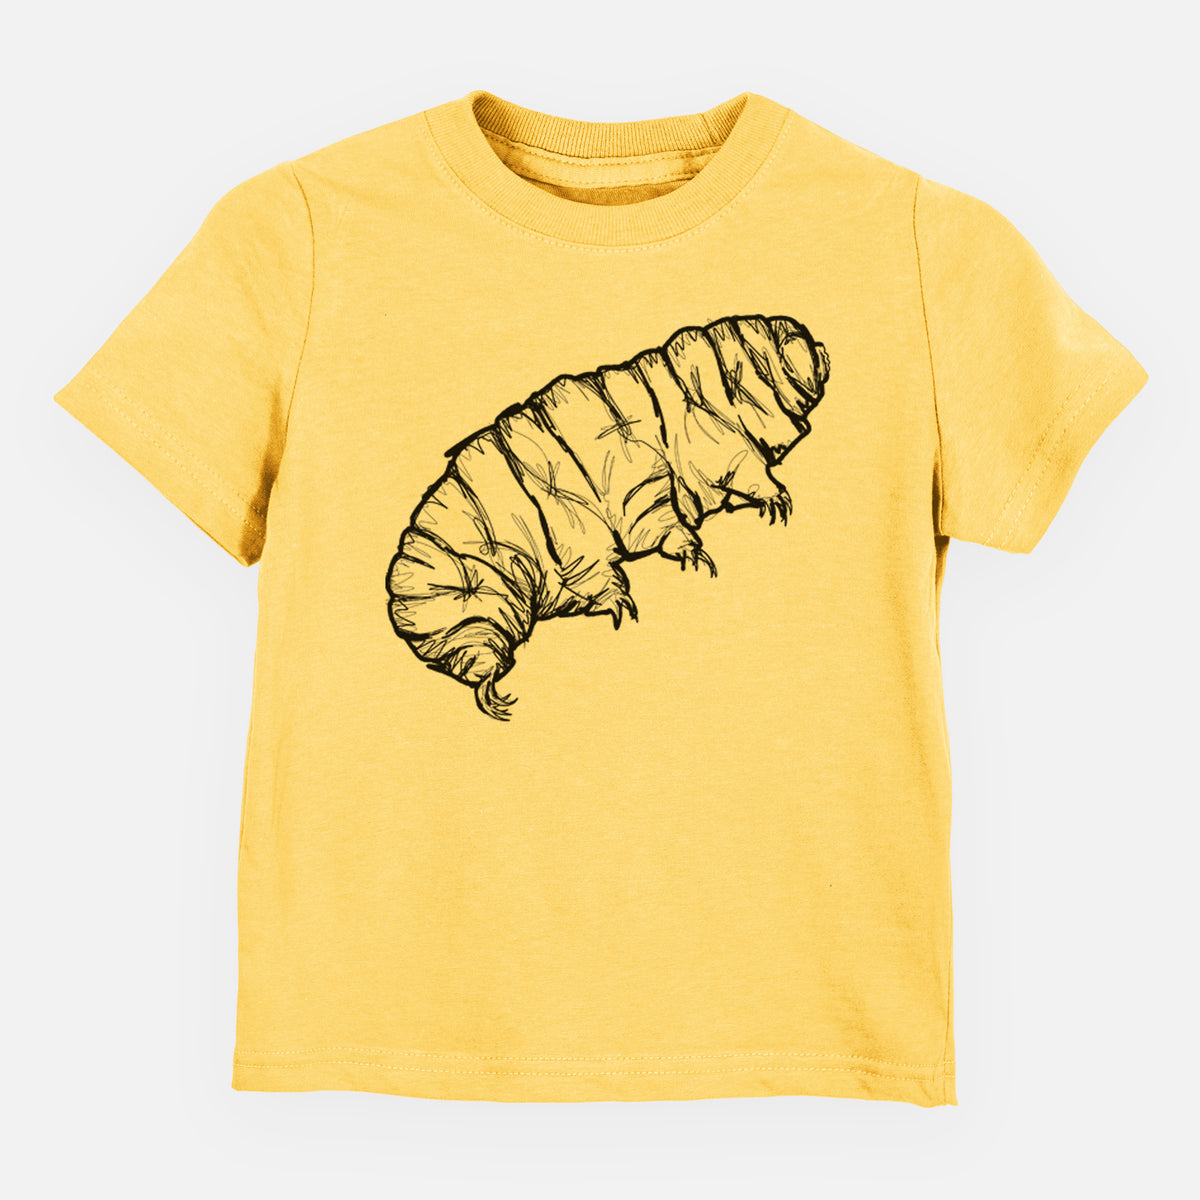 Tardigrade - Tardigrada - Kids Shirt